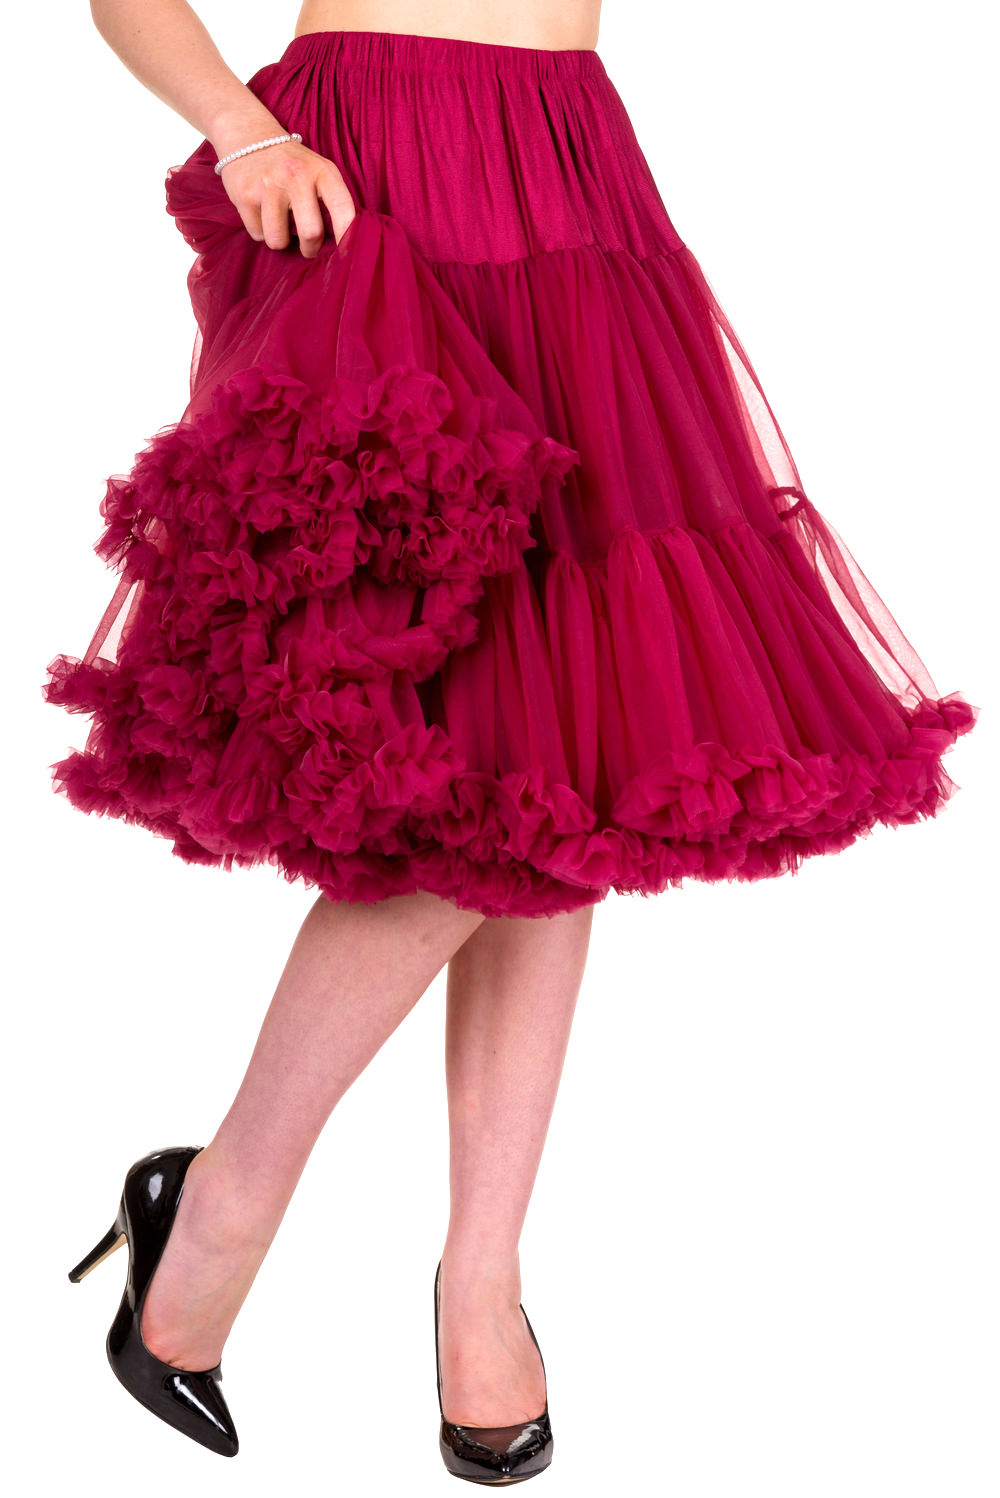 Banned Retro 50s Lizzy Lifeforms Bordeaux Petticoat